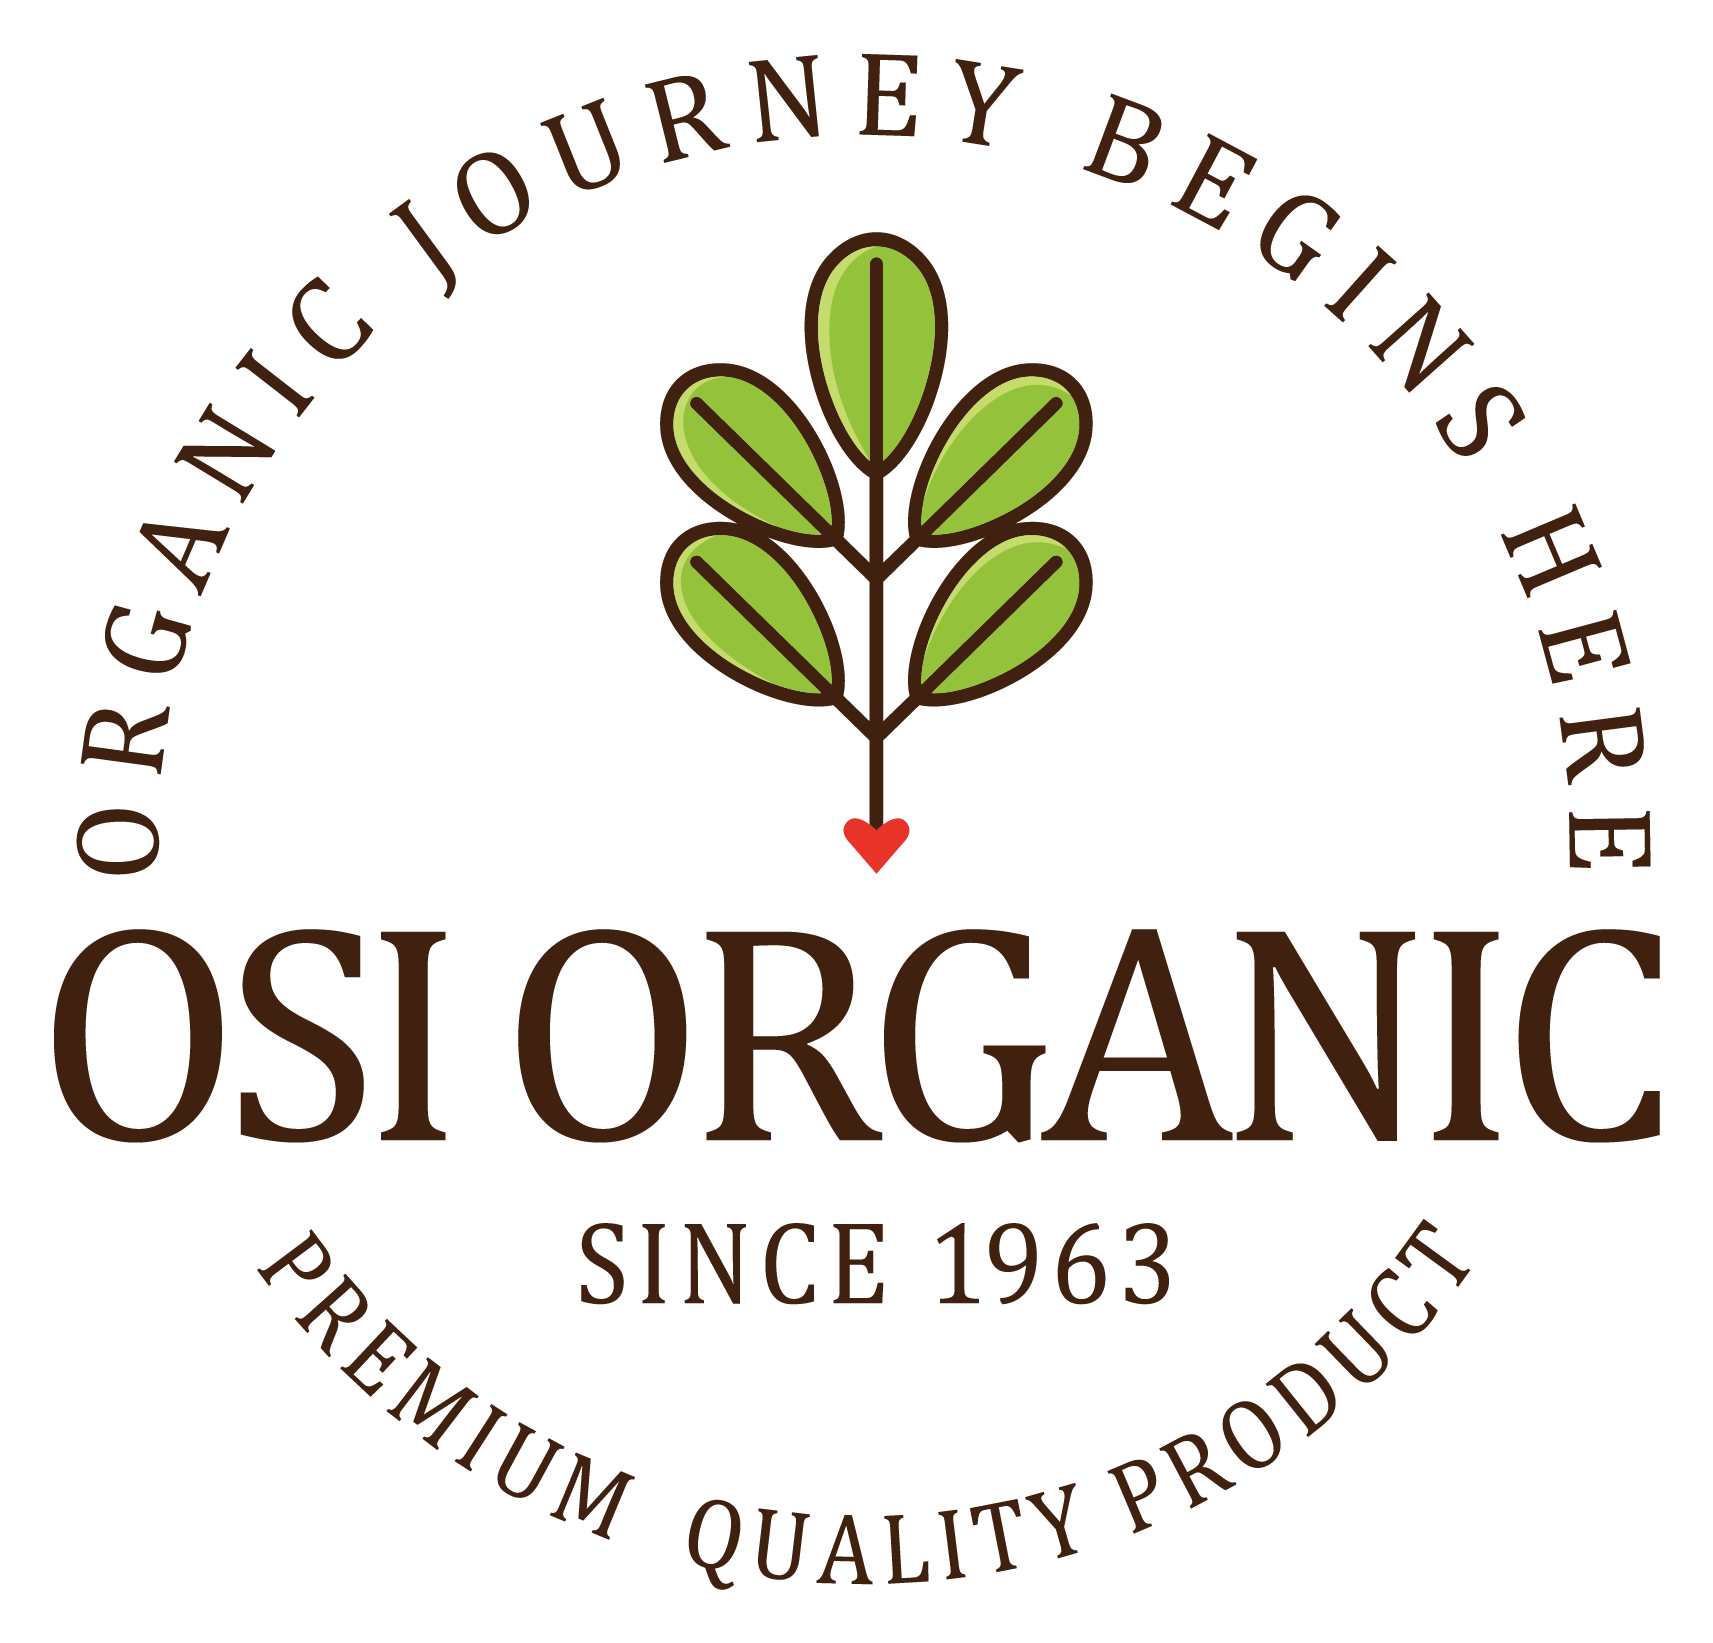 OSI ORGANIC 奇跡のスーパーフードヒマラヤモリンガ